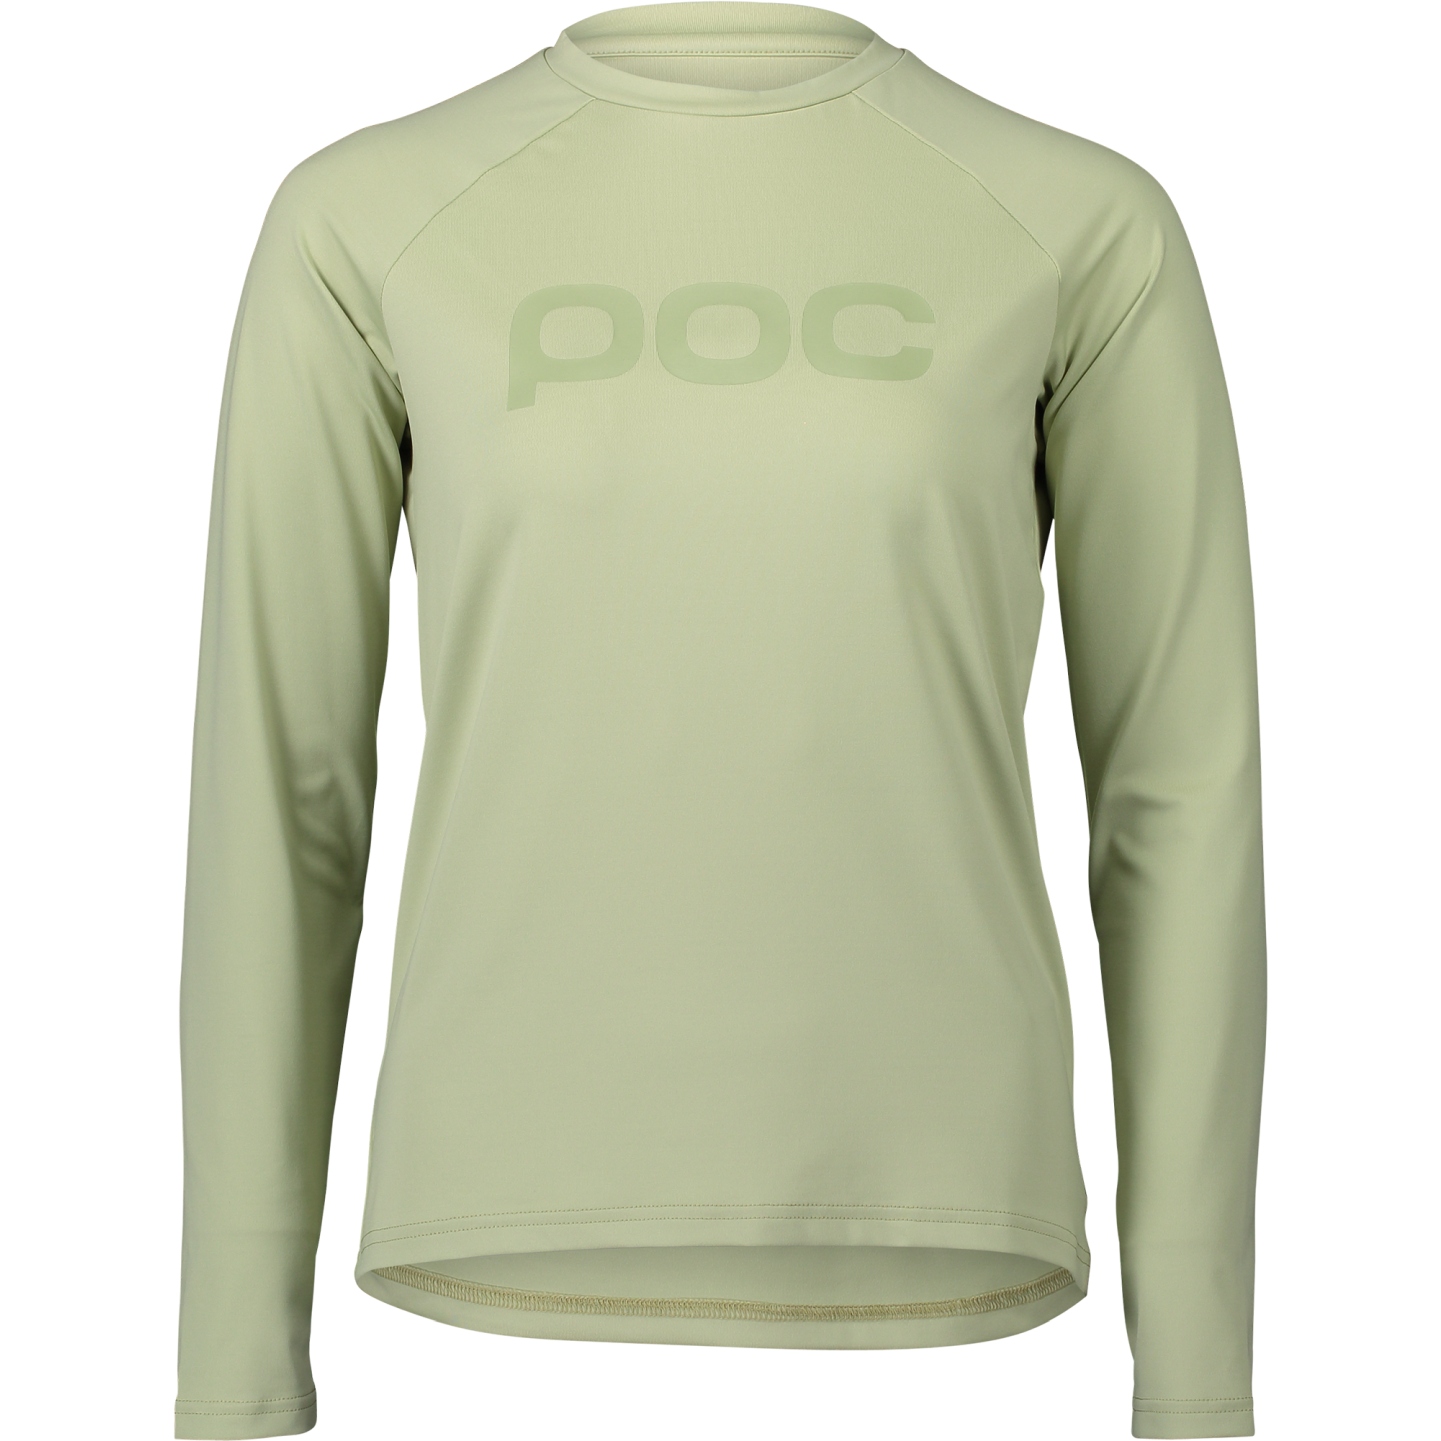 Productfoto van POC Reform Enduro Shirt Dames - 1447 Prehnite Green